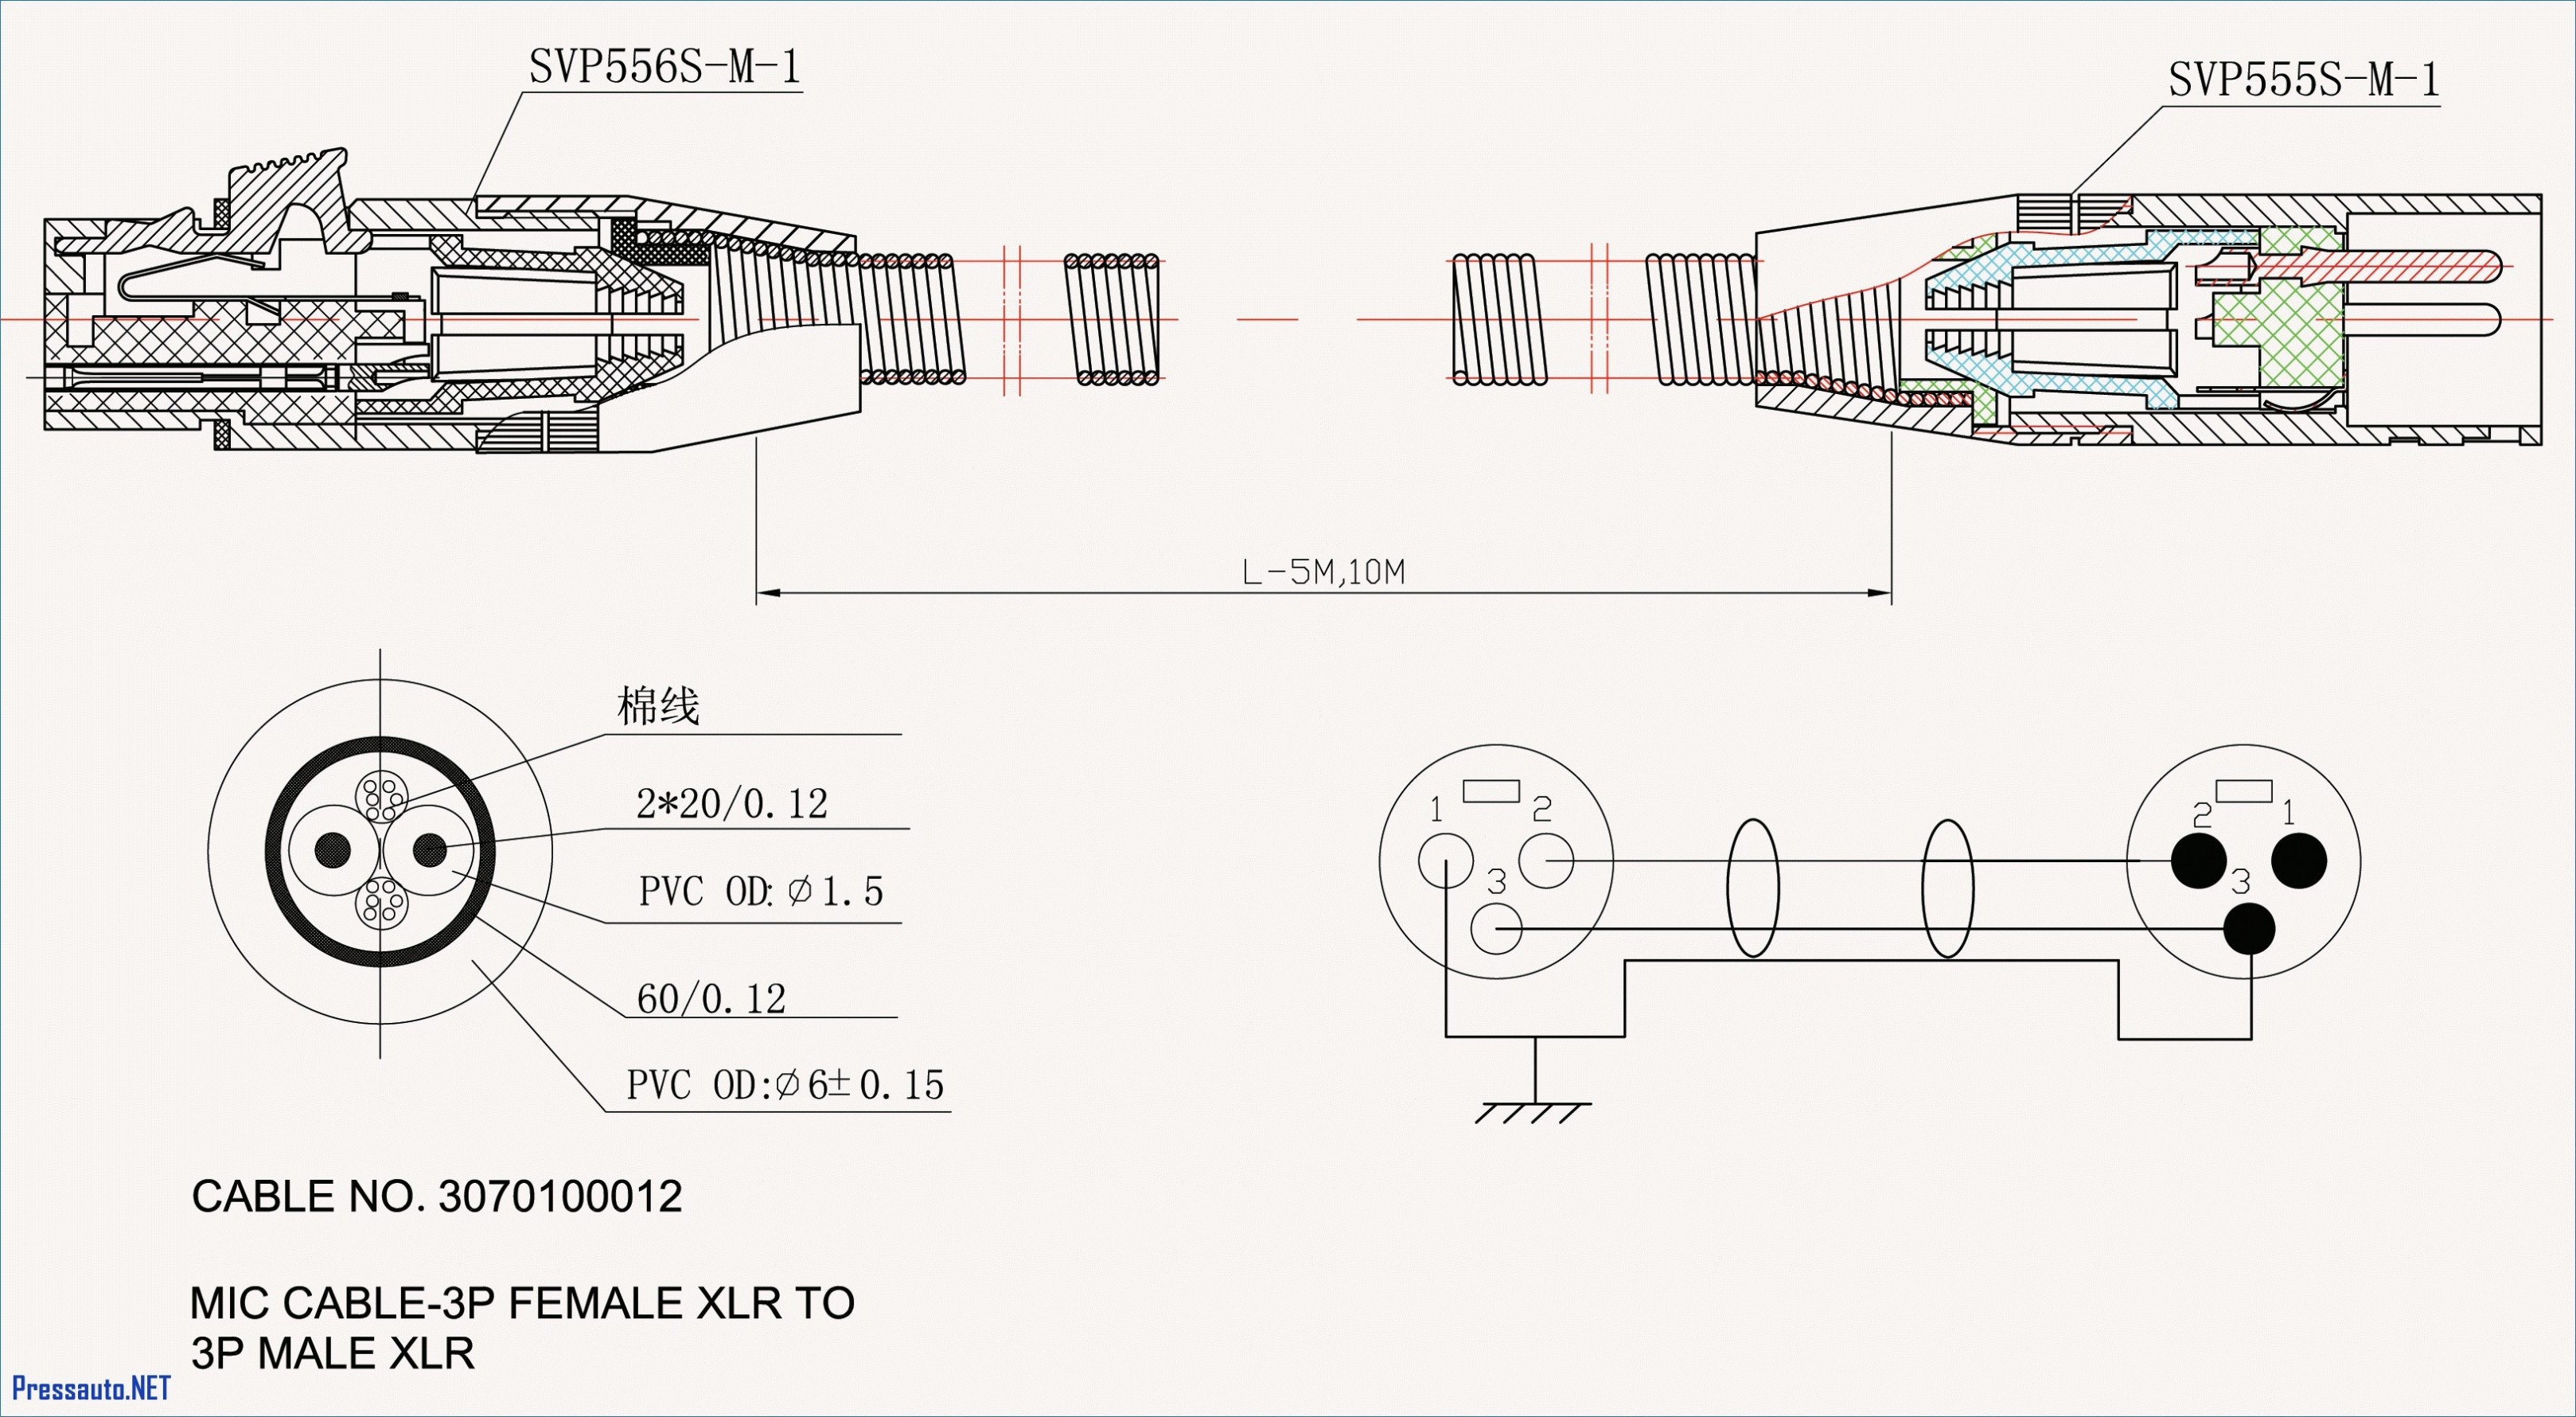 Wiring Diagram For Trailer Lights 7 Way Book 7 Way Plug Wire Diagram – Australian Trailer Plug Wiring Diagram 7